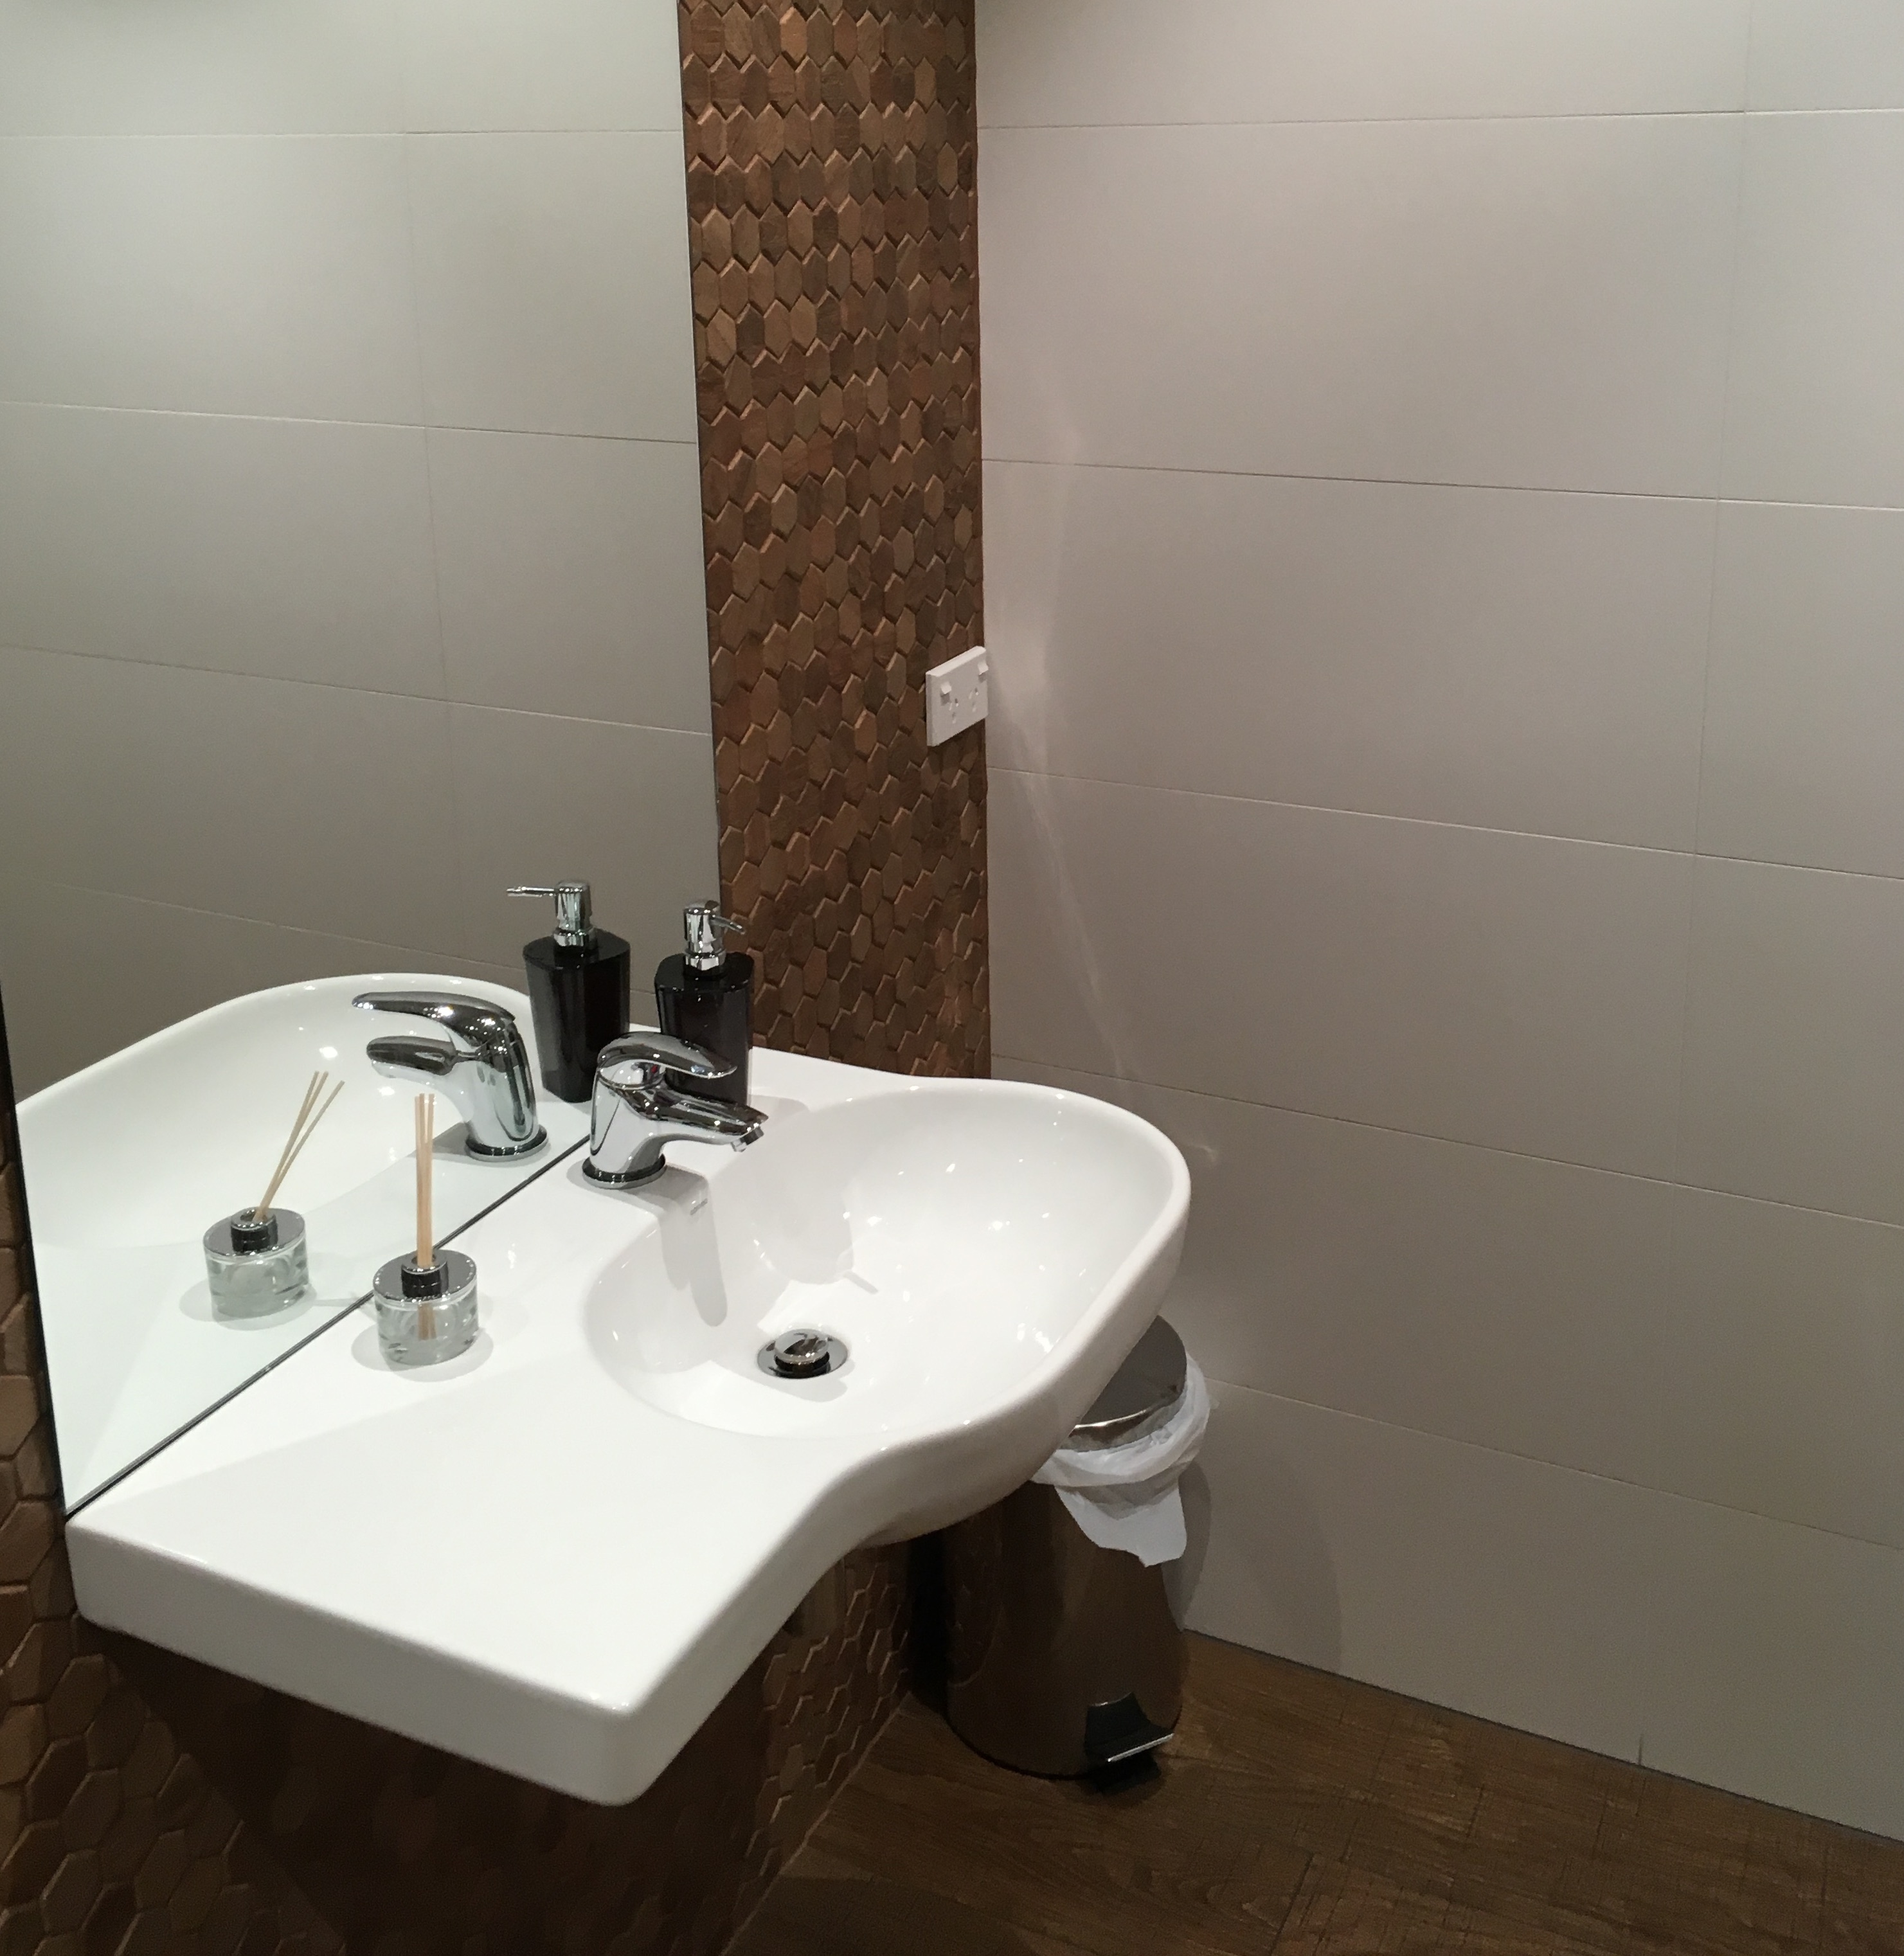 Manaia Lounge Queenstown bathroom sink